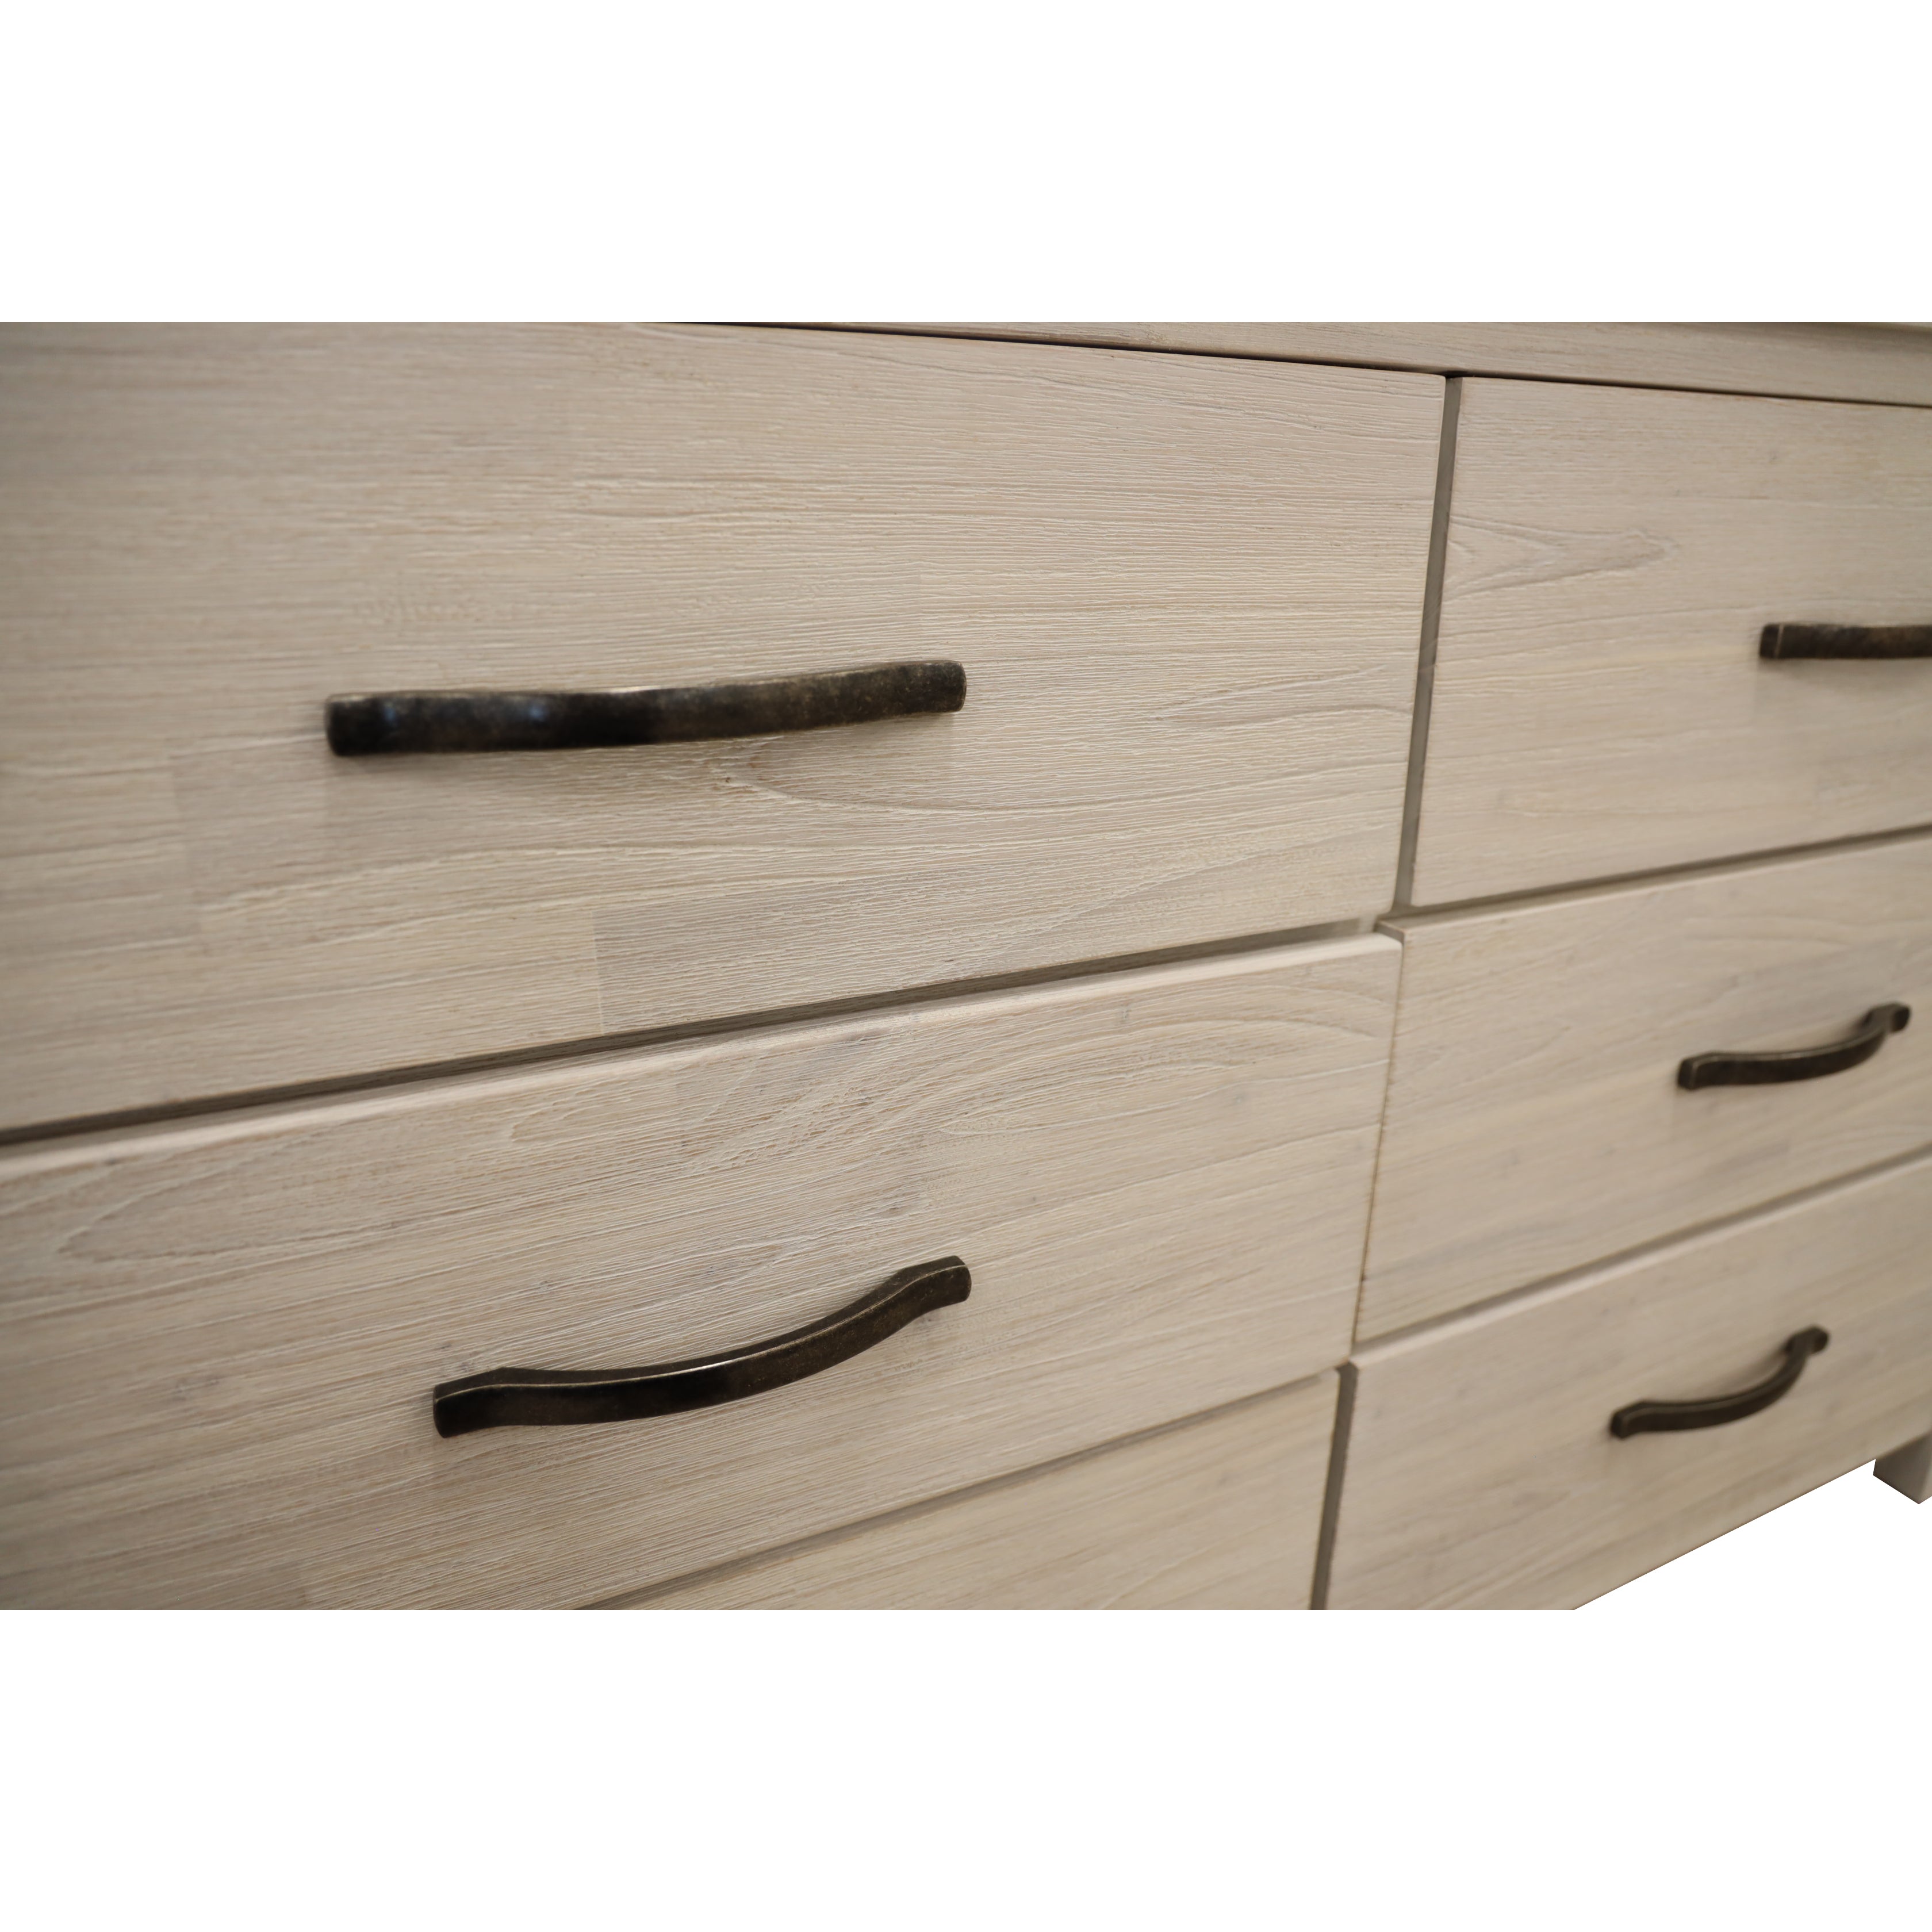 Dresser 6 Chest Of Drawers Solid Wood Tallboy Storage Cabinet - White